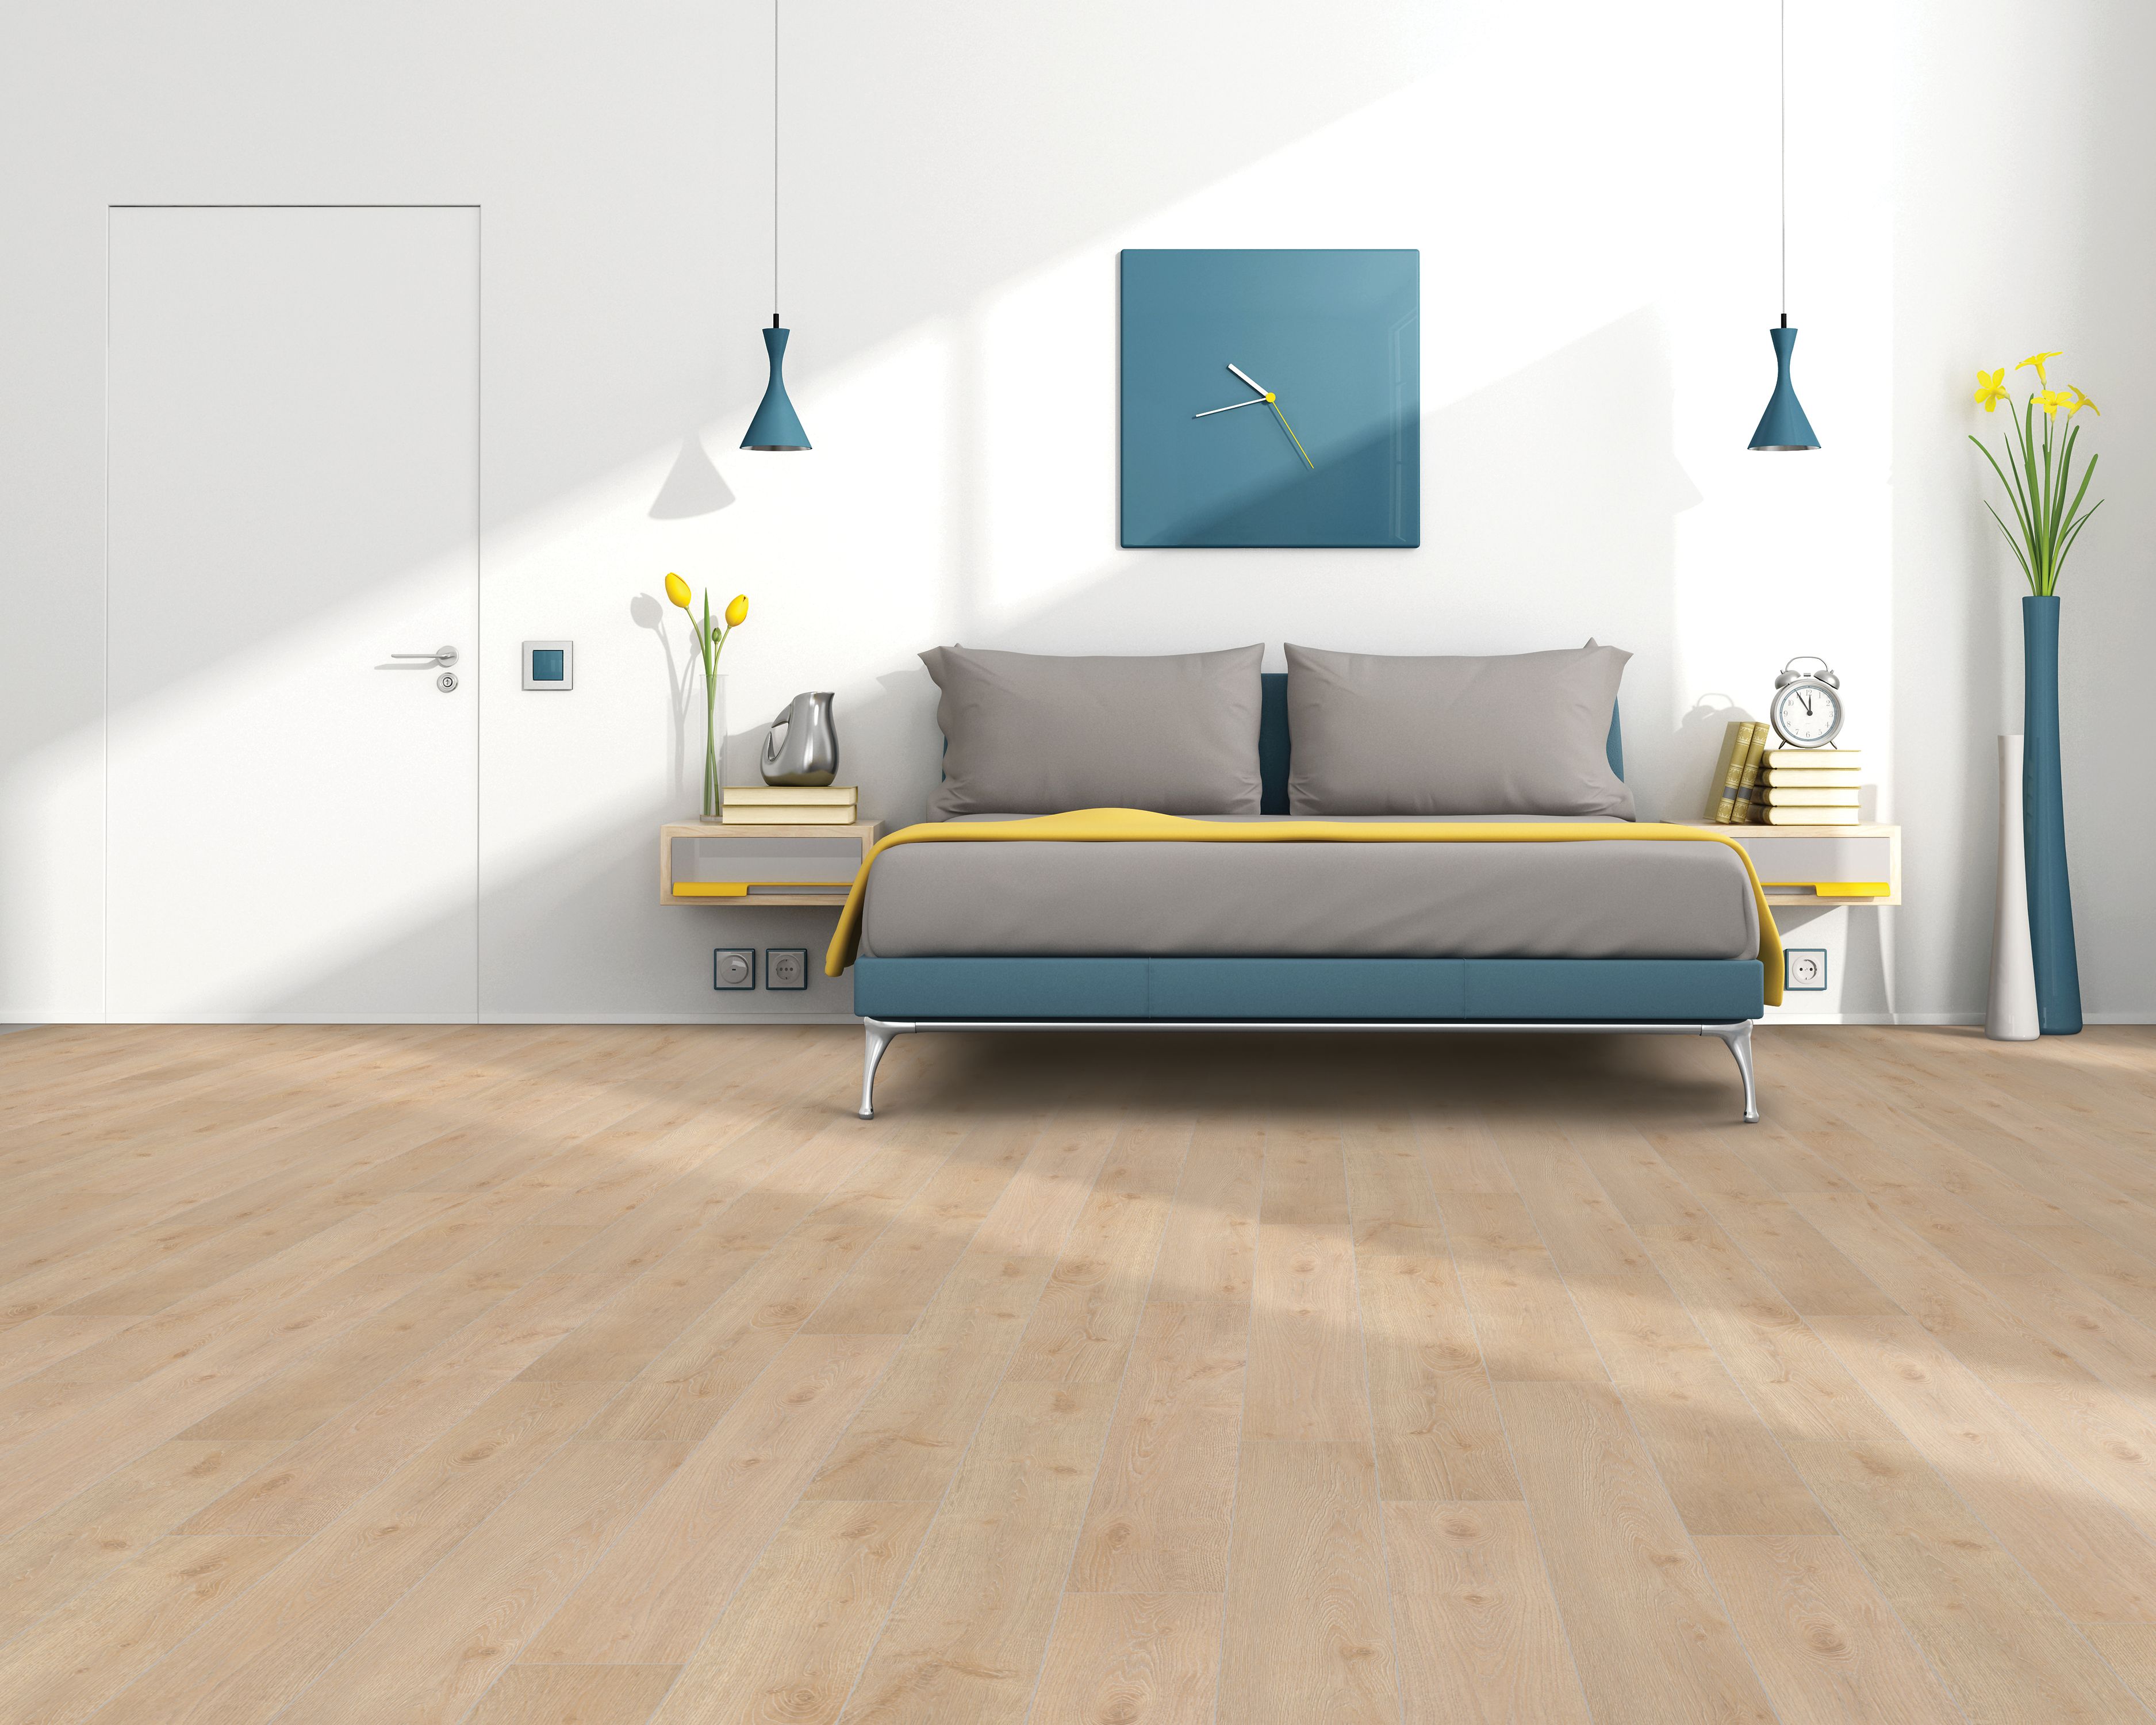 light brown laminate floors in modern minimalist bedroom